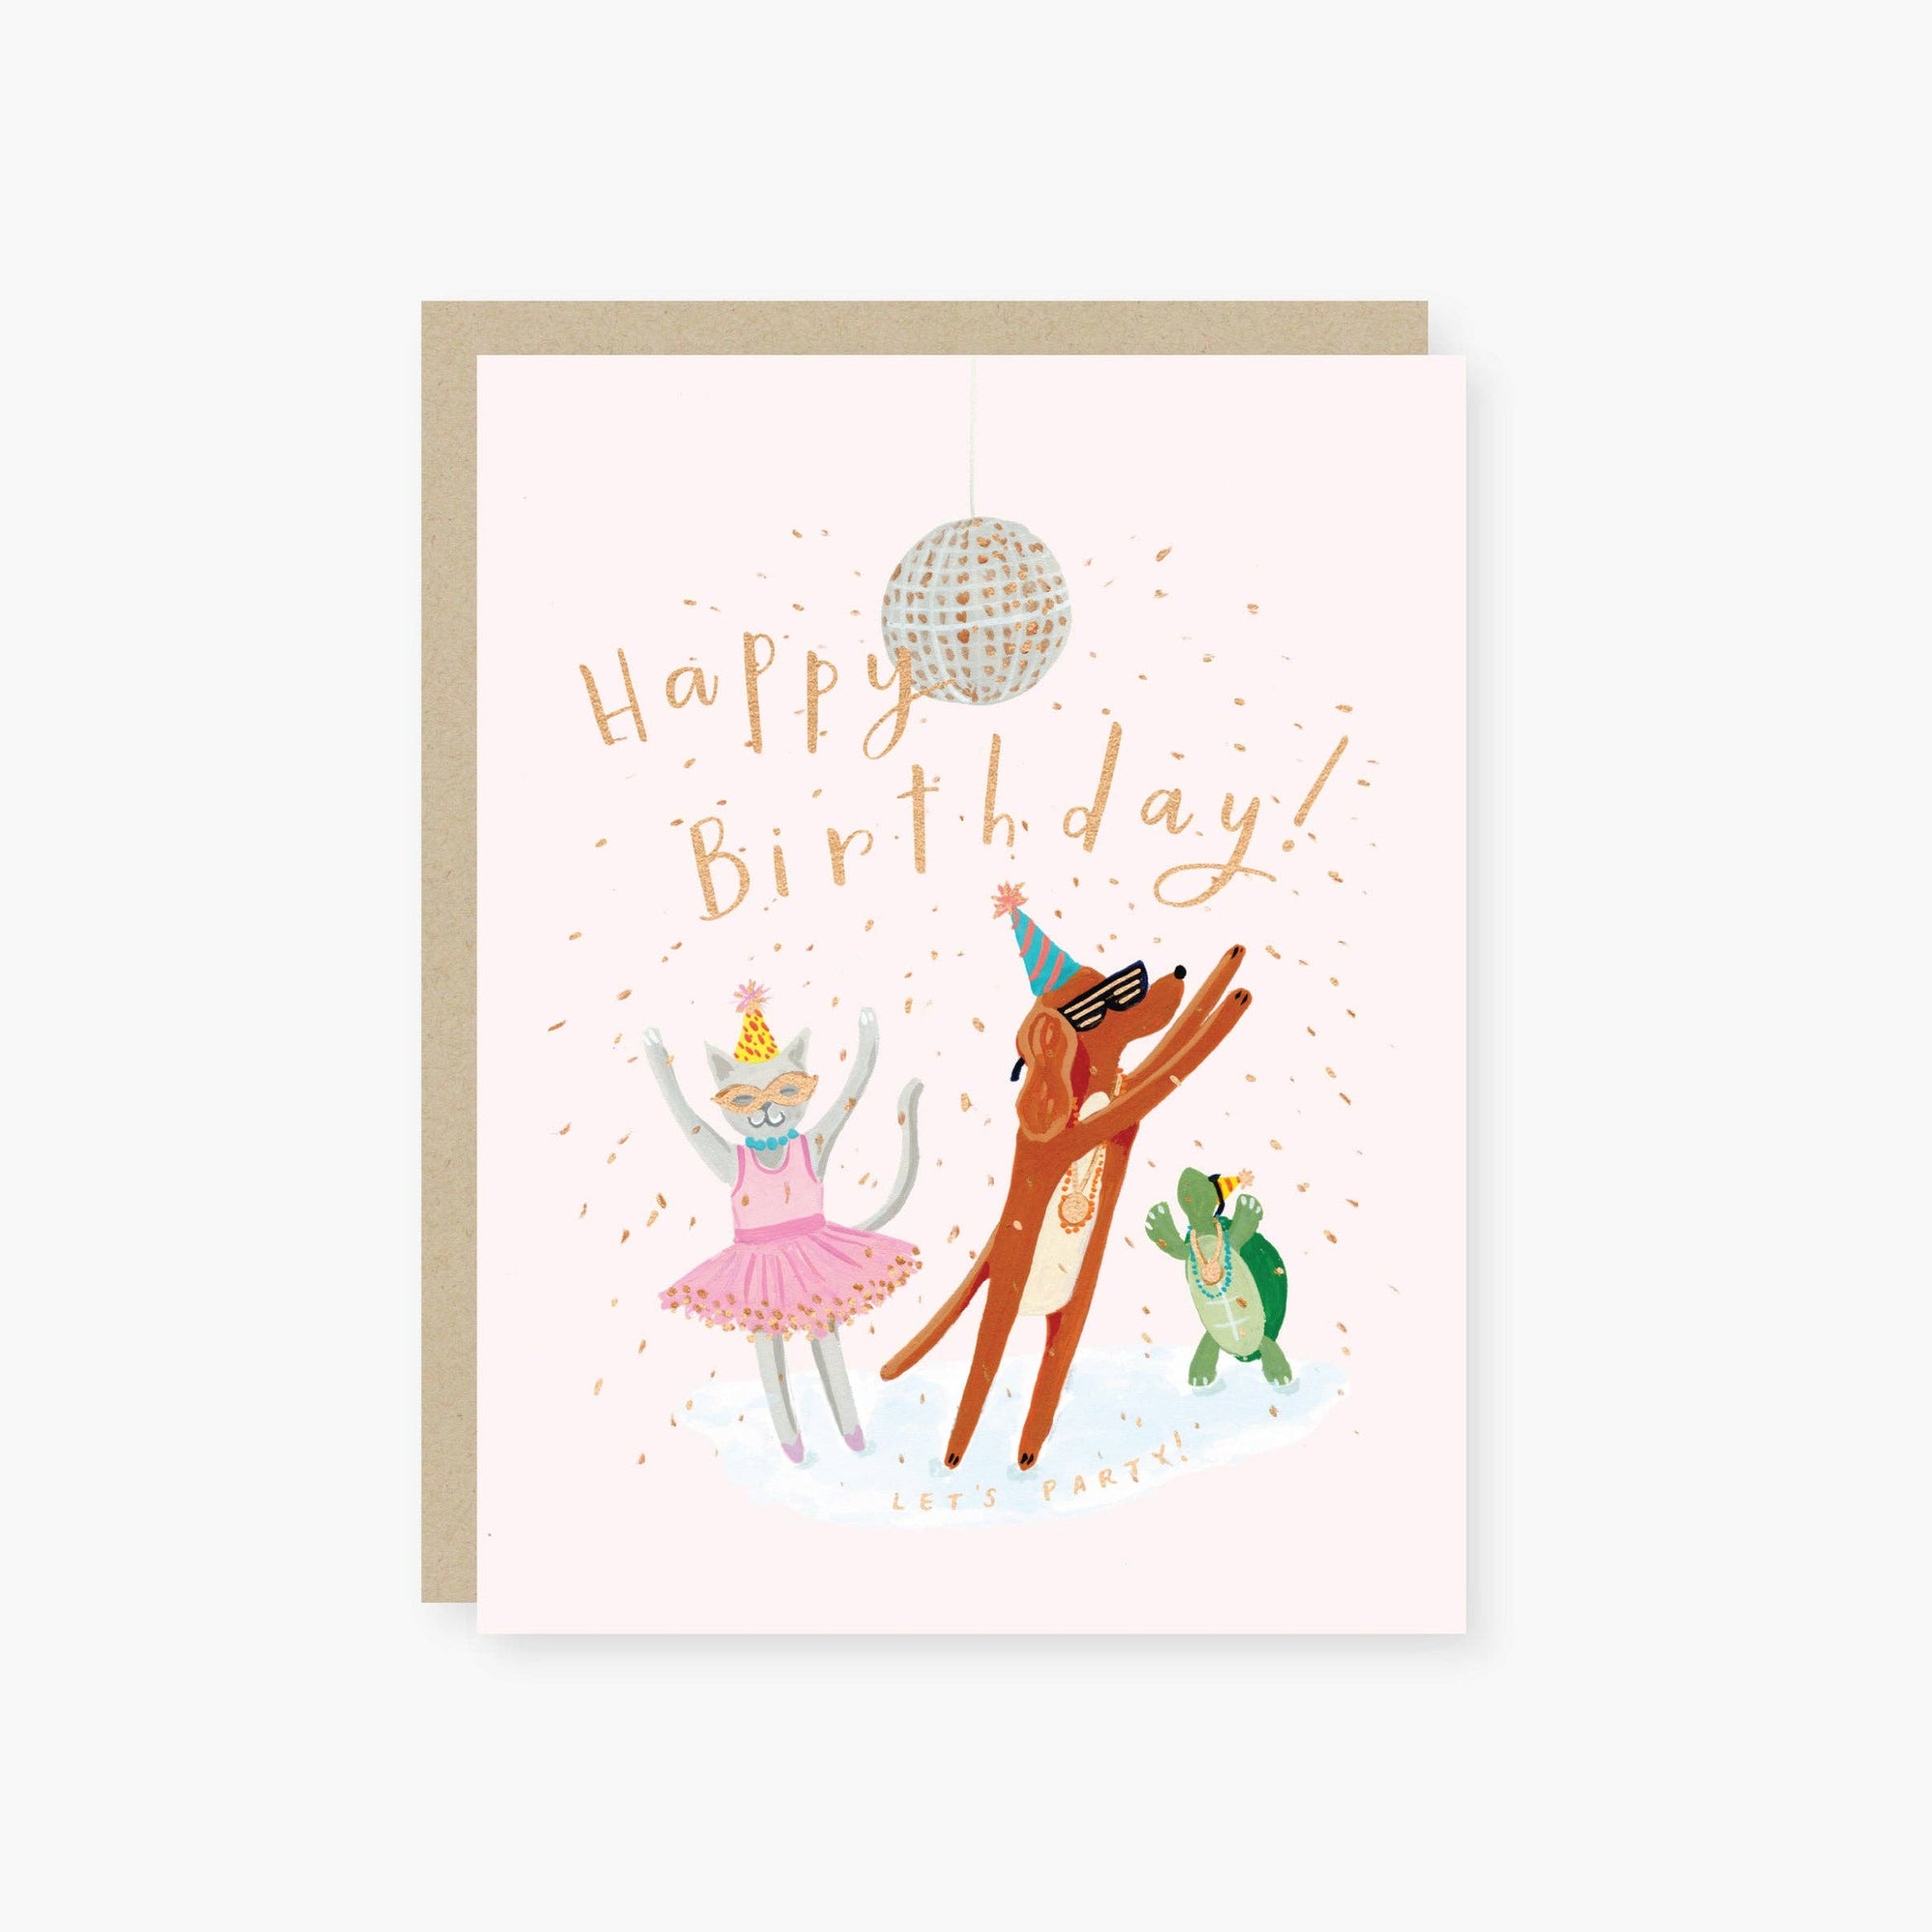 Disco ball party animals kids birthday card: Single